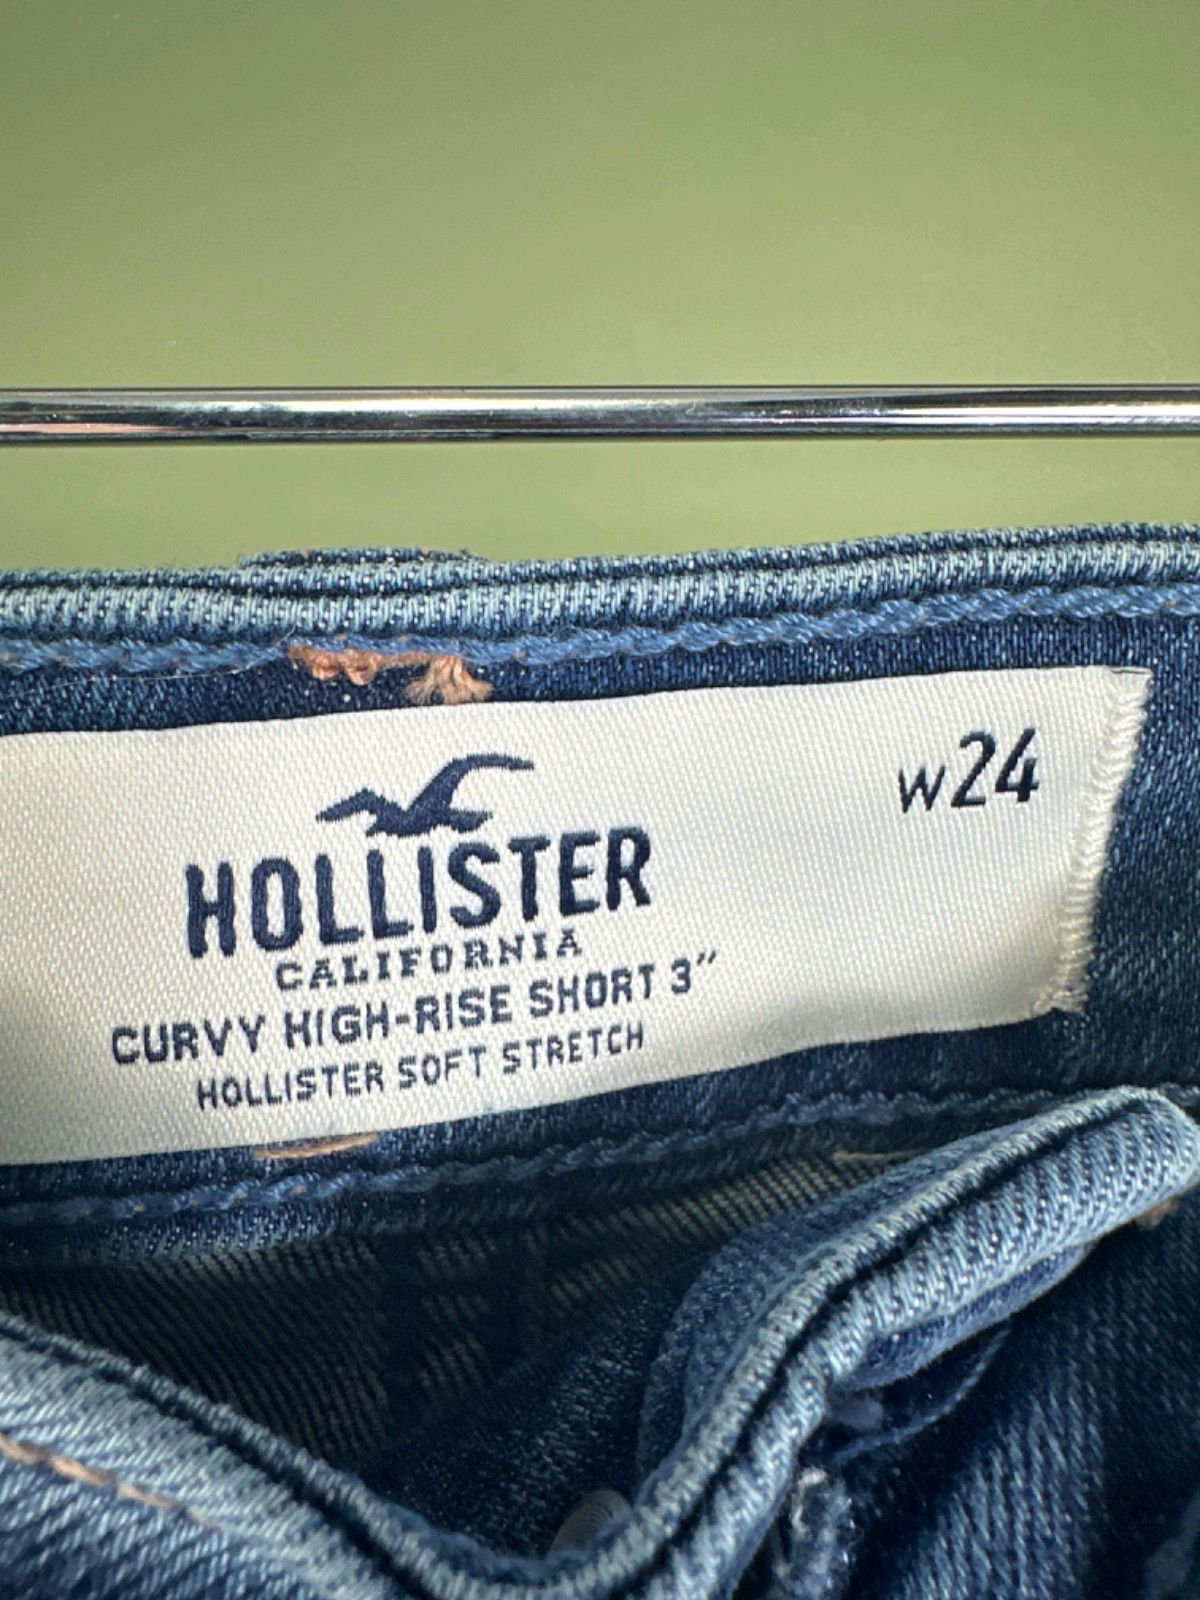 Hollister Blue Curvy High-Rise Short 3" W24